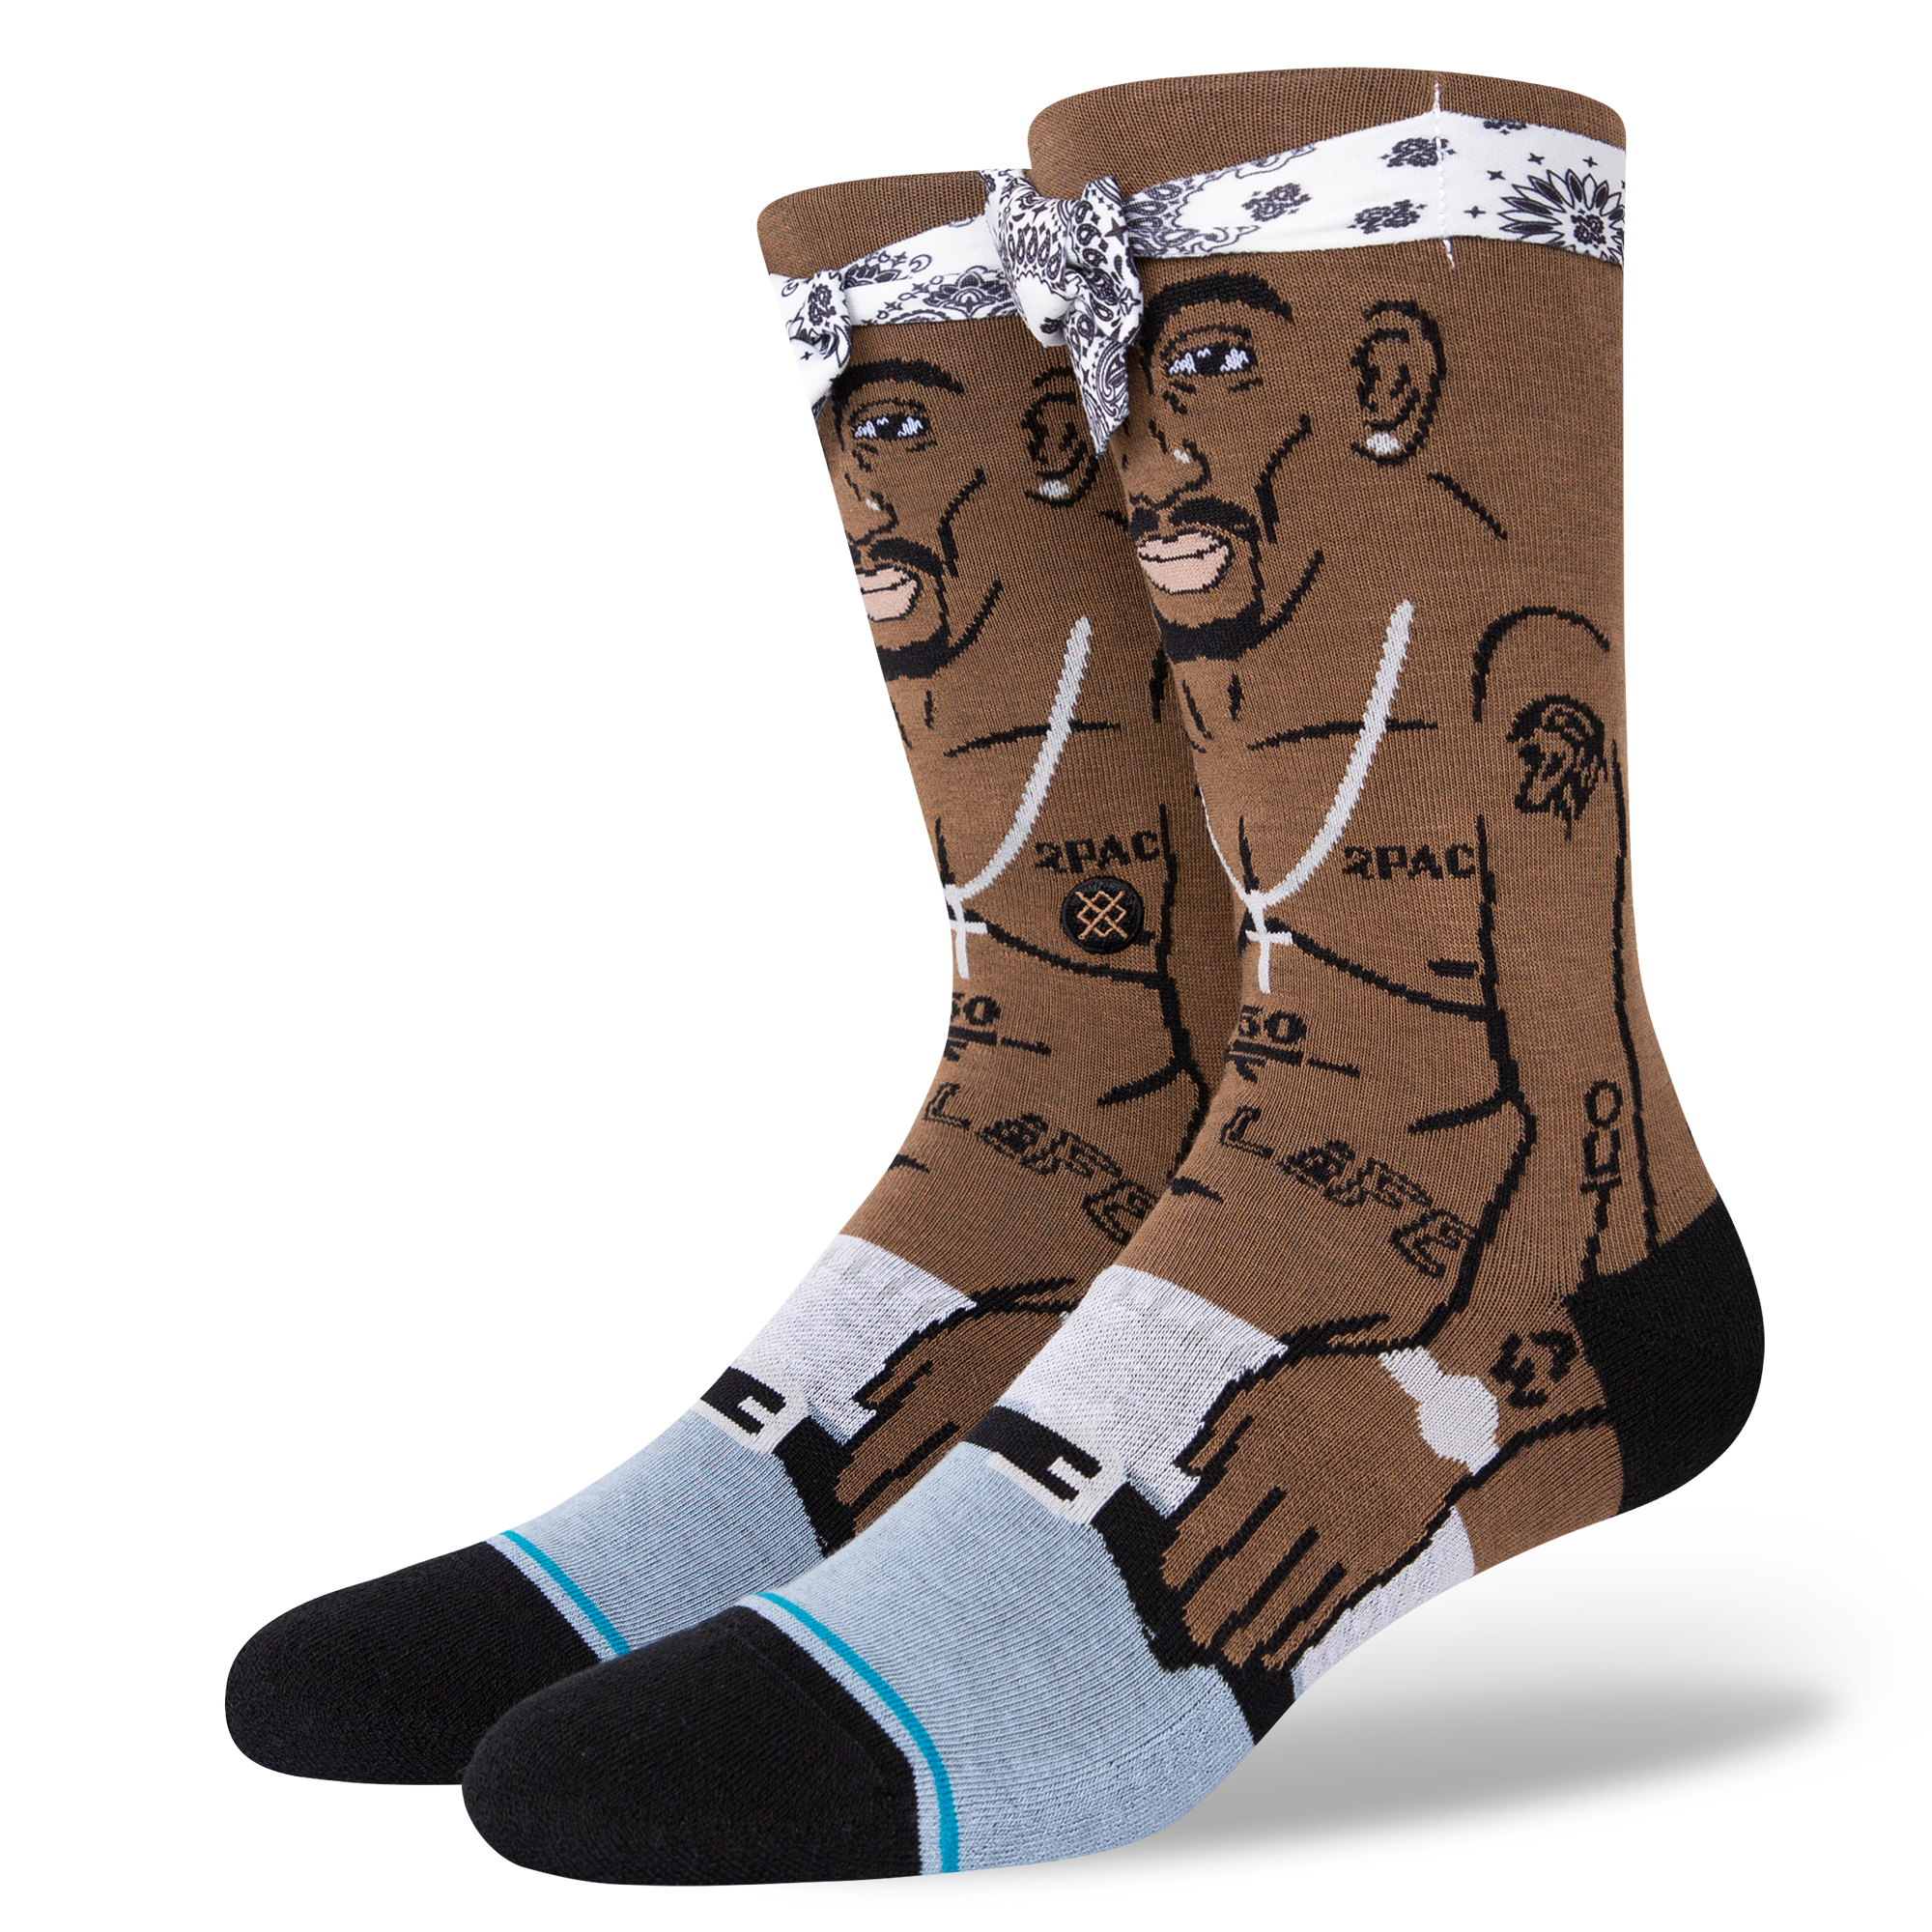 Tupac Shakur Resurrected Light Cushion Infiknit™ Cotton Blend Crew Socks |  Stance